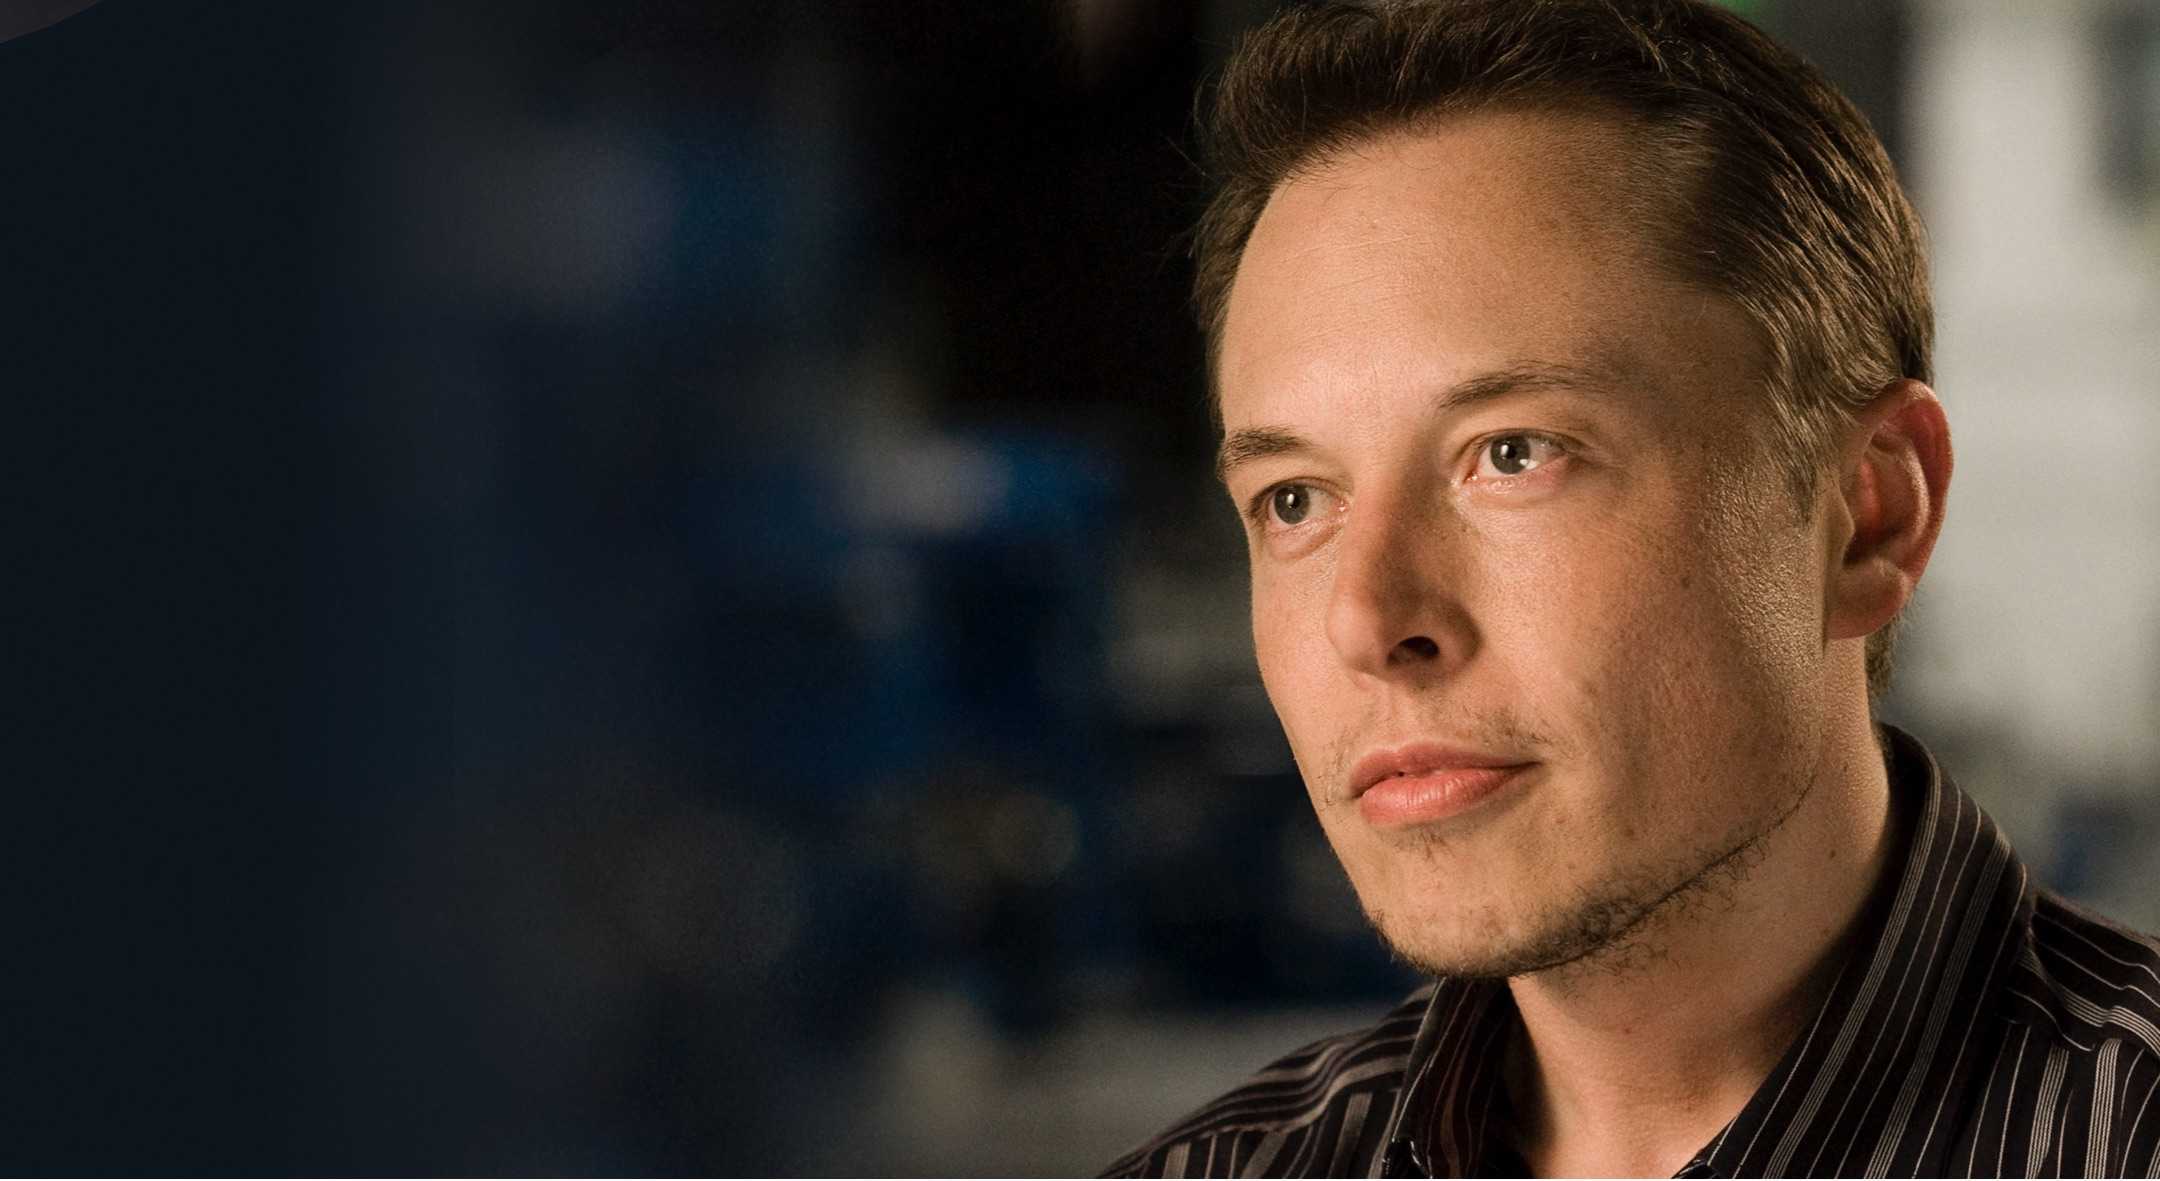 Elon Musk's photo